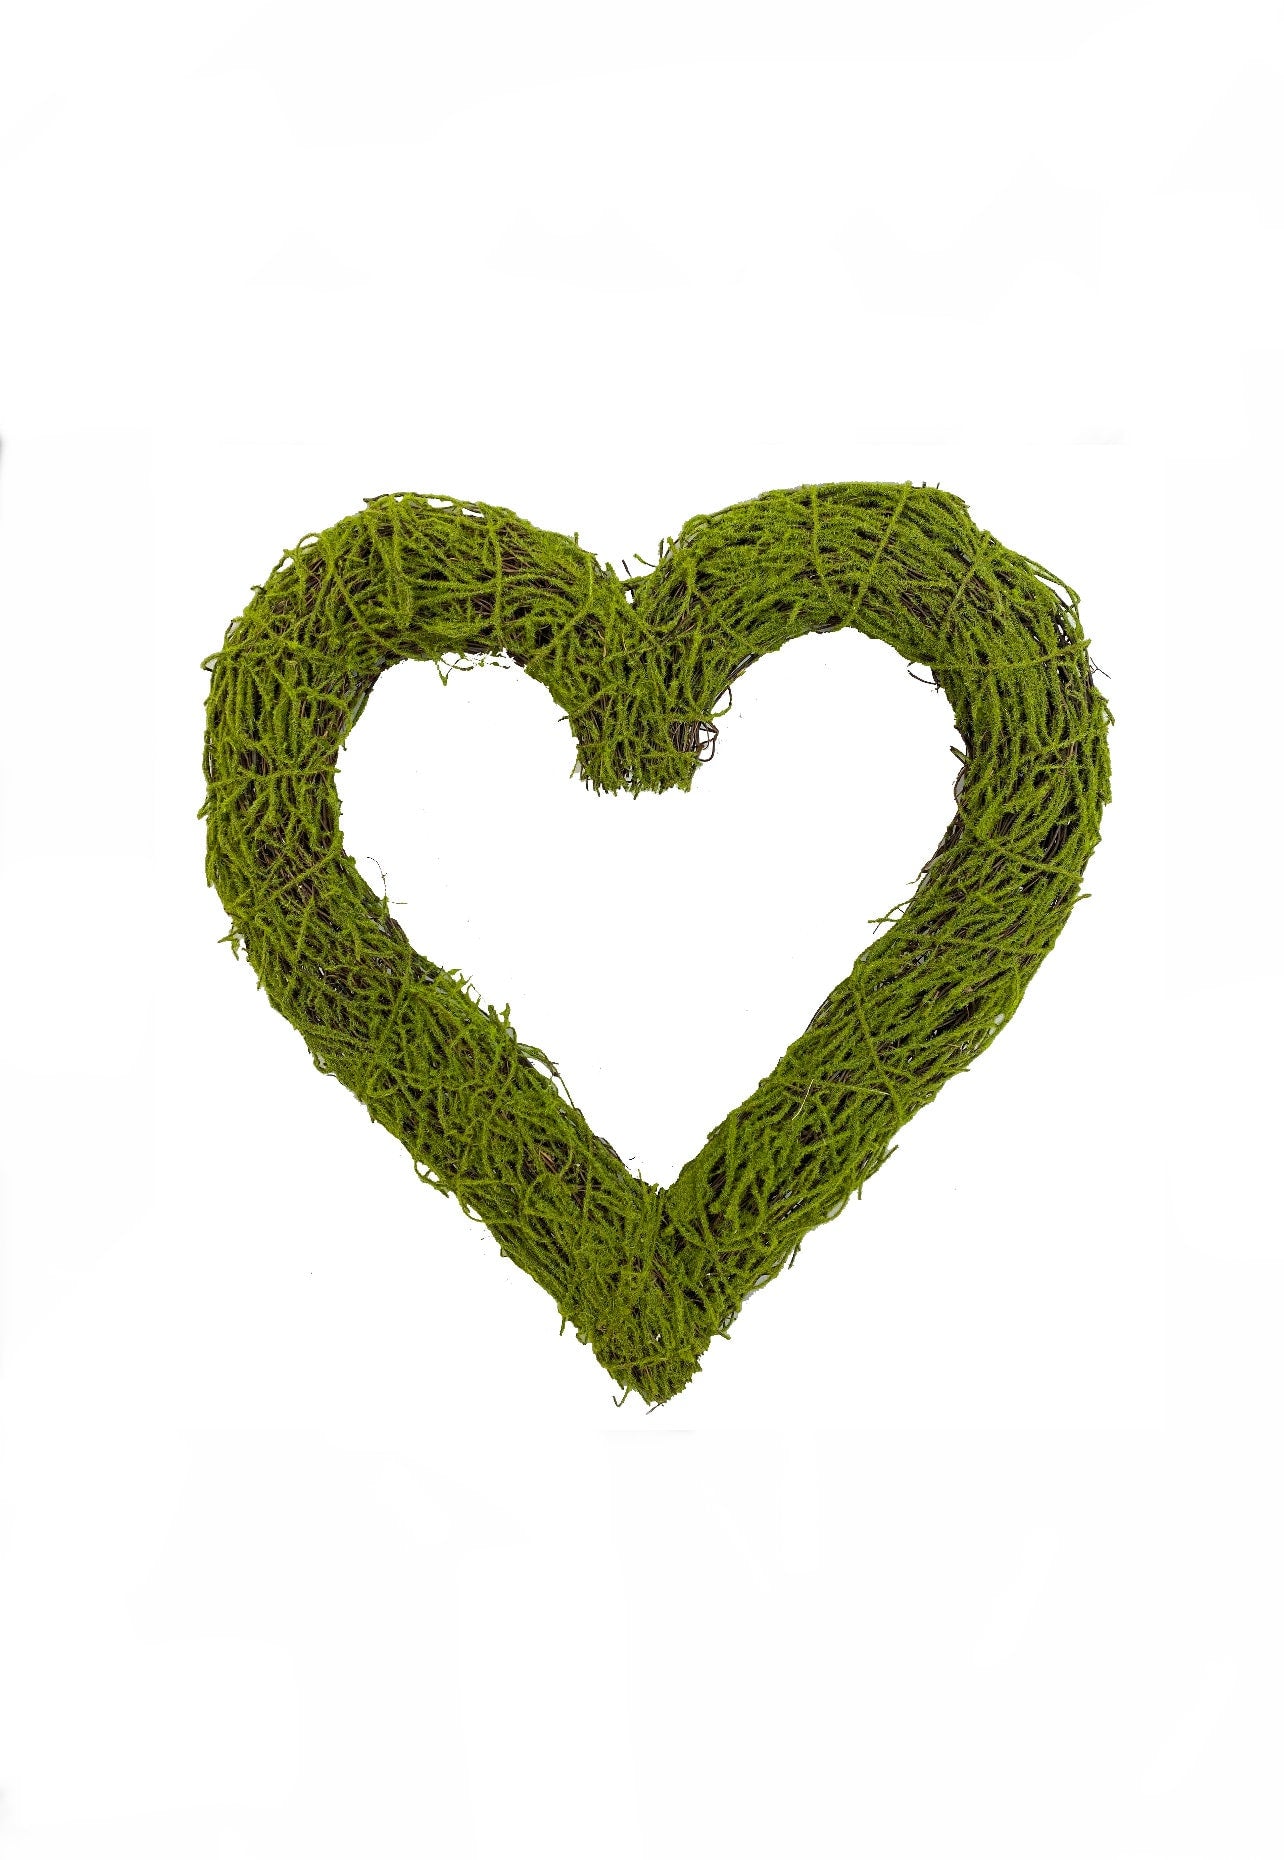 Moss Heart Grapevine Wreath Form ~ 17 Inch